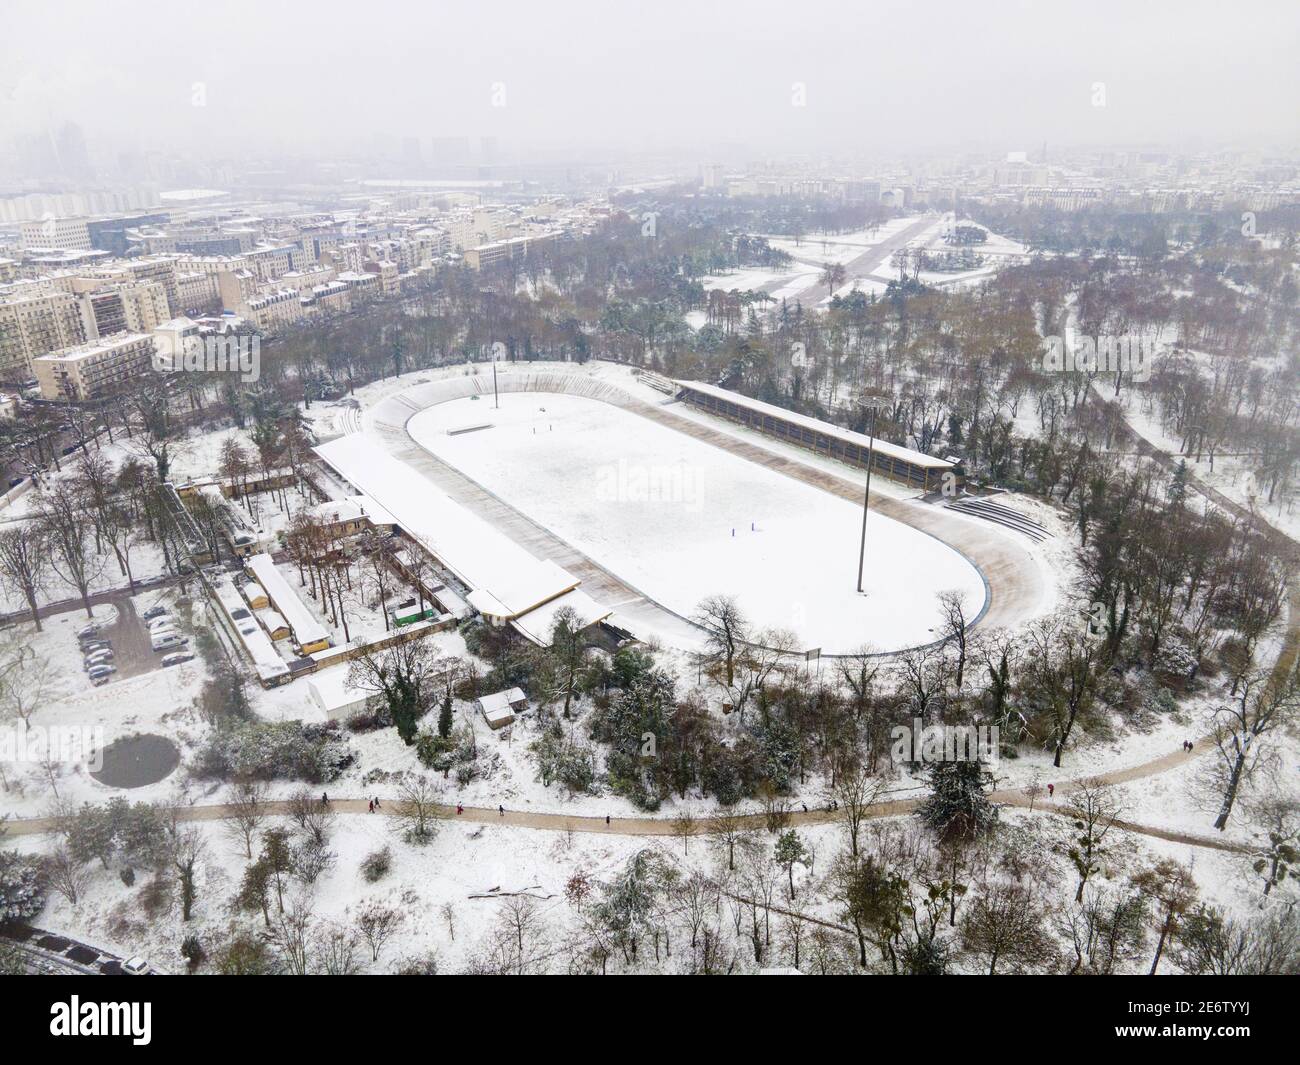 France, Paris, Bois de Vincennes, the Jacques Anquetil stadium and velodrome in winter under the snow (aerial view) Stock Photo